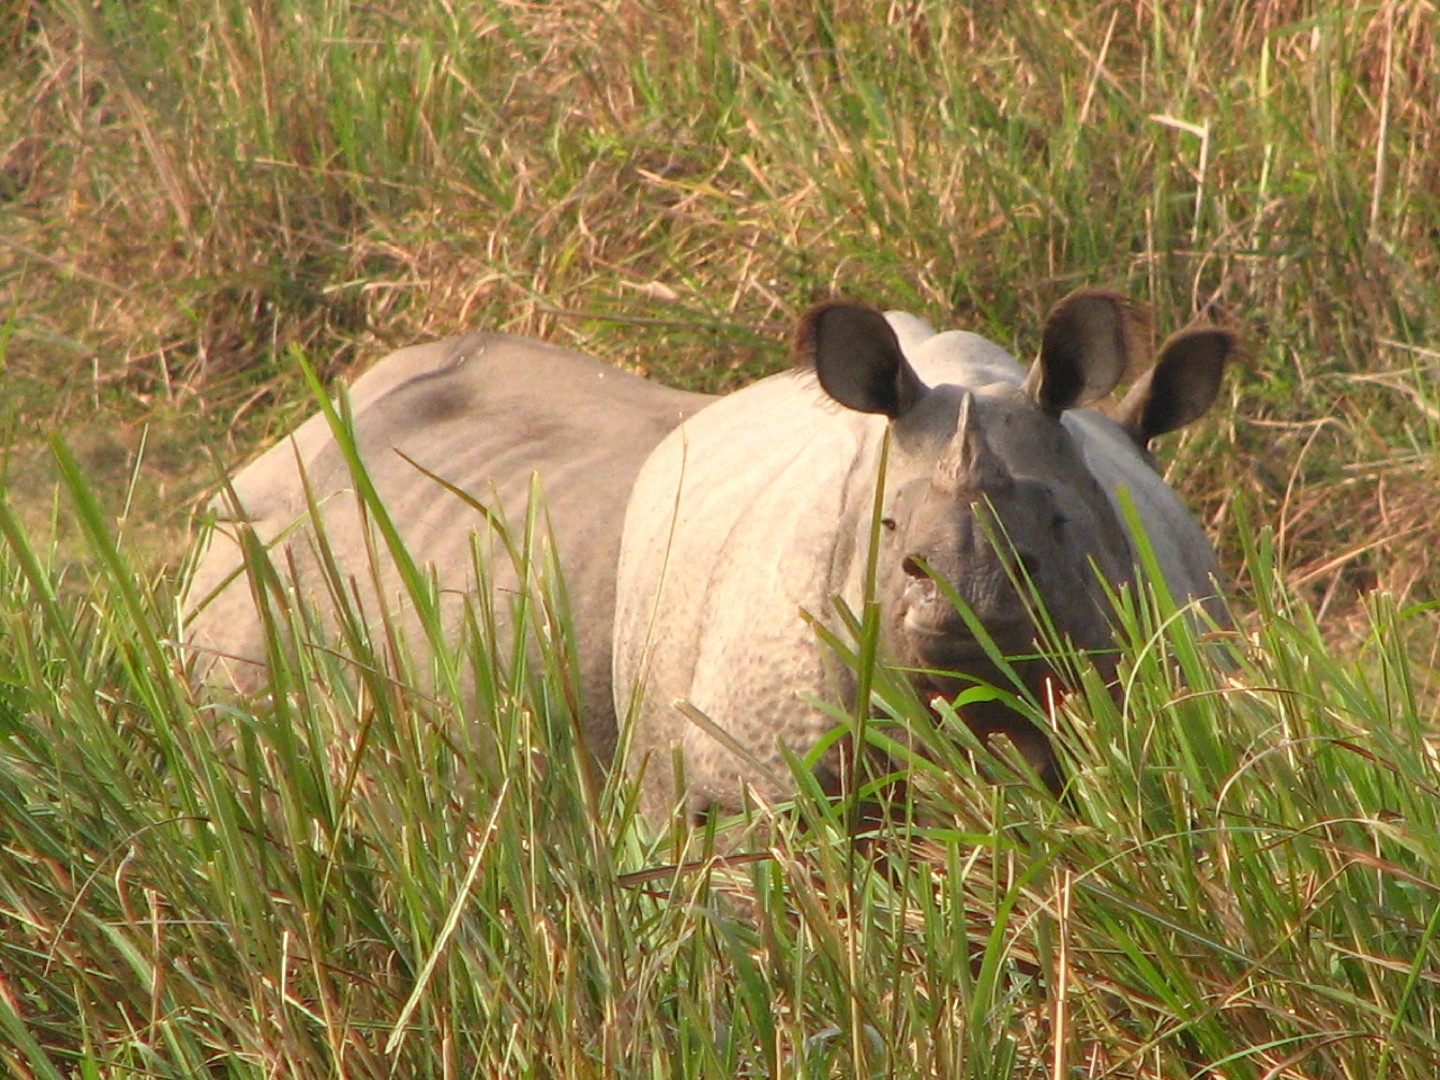 Asian rhinoceroses (Rhinoceros)